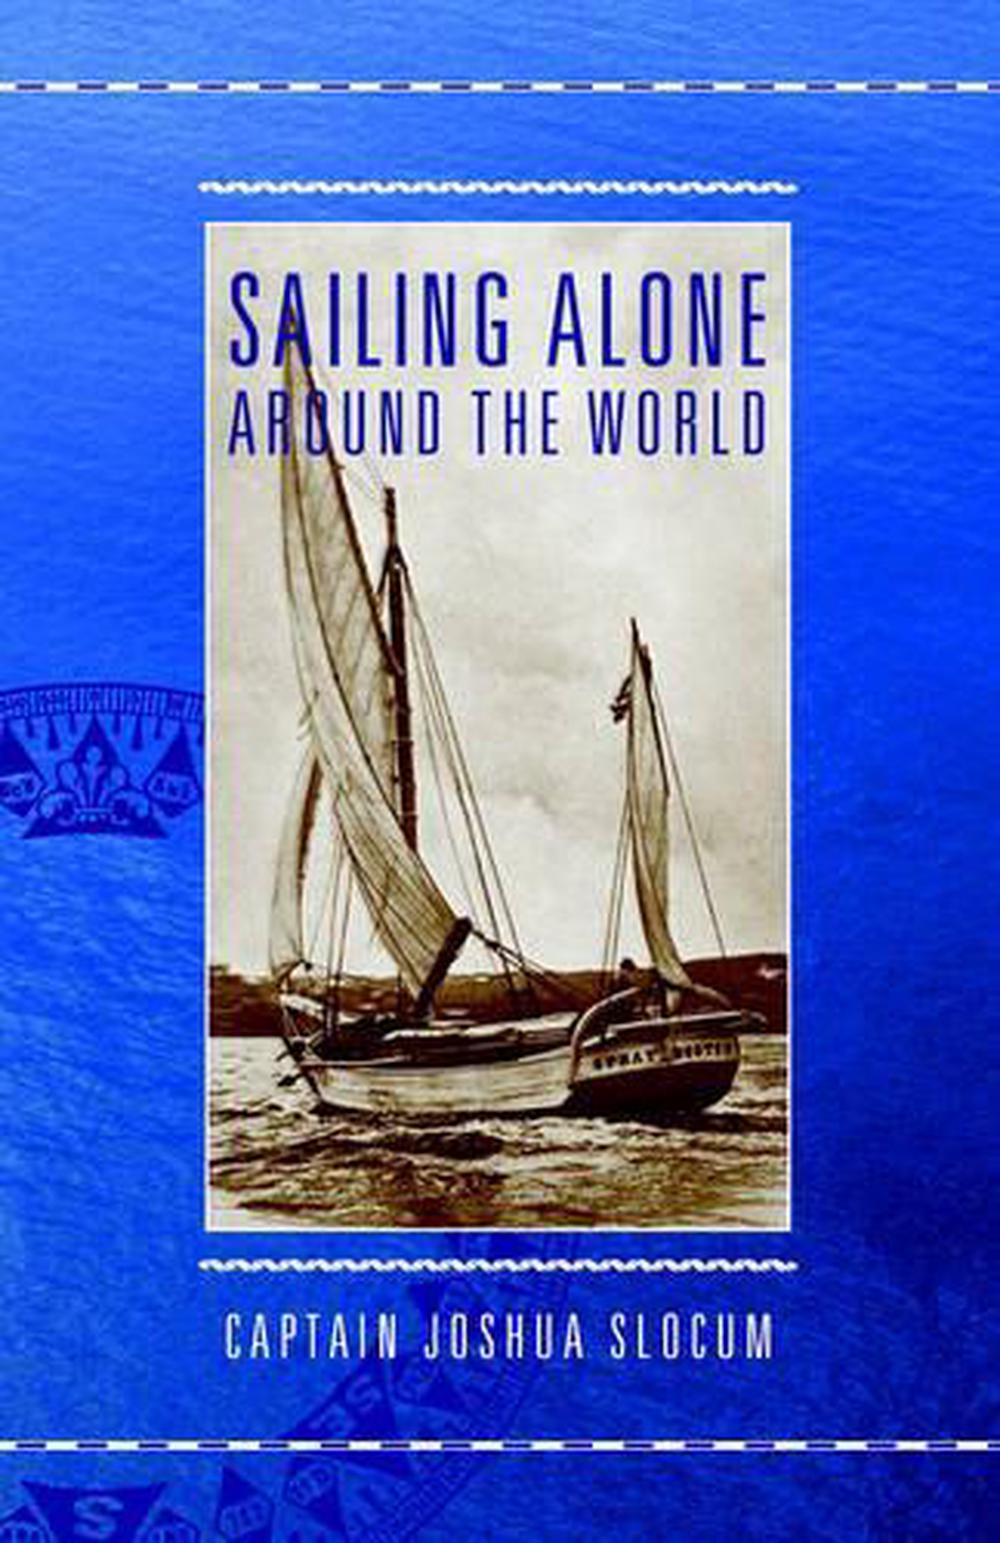 book sailing alone around the world